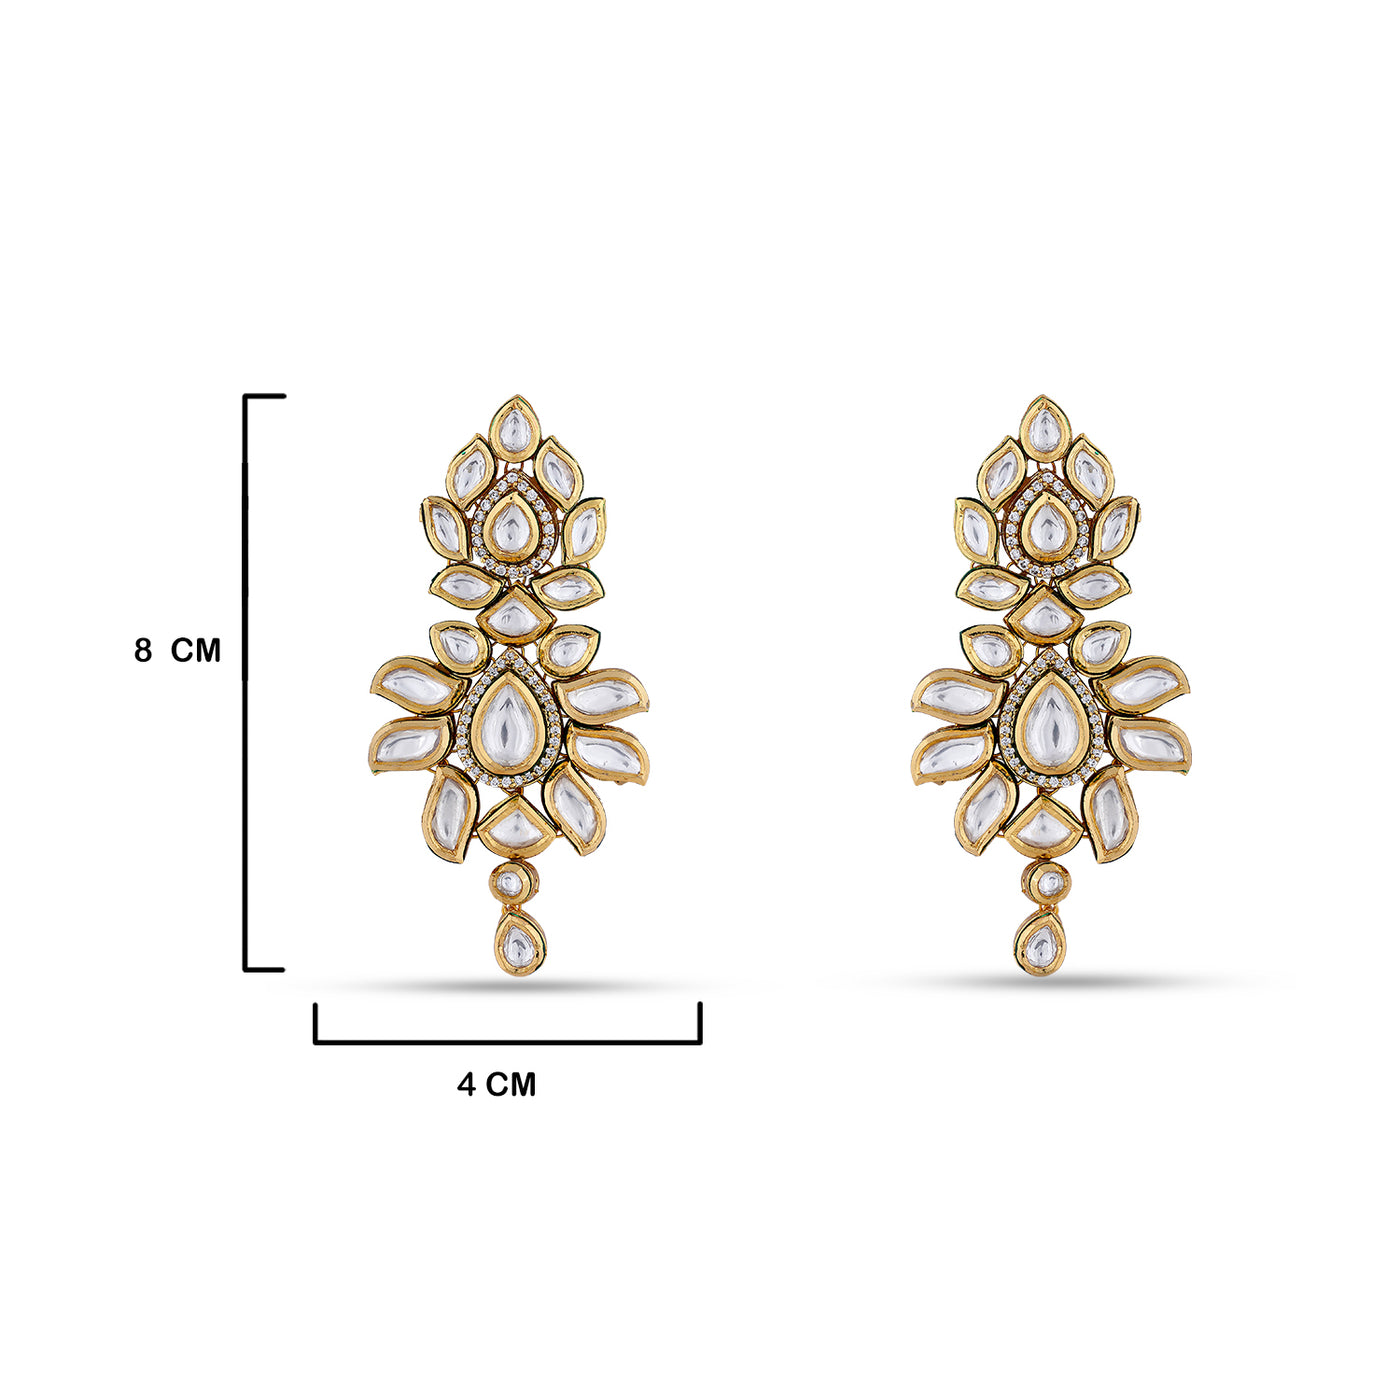 Kundan Studded Earrings with measurements in cm. 8cm by 4cm.